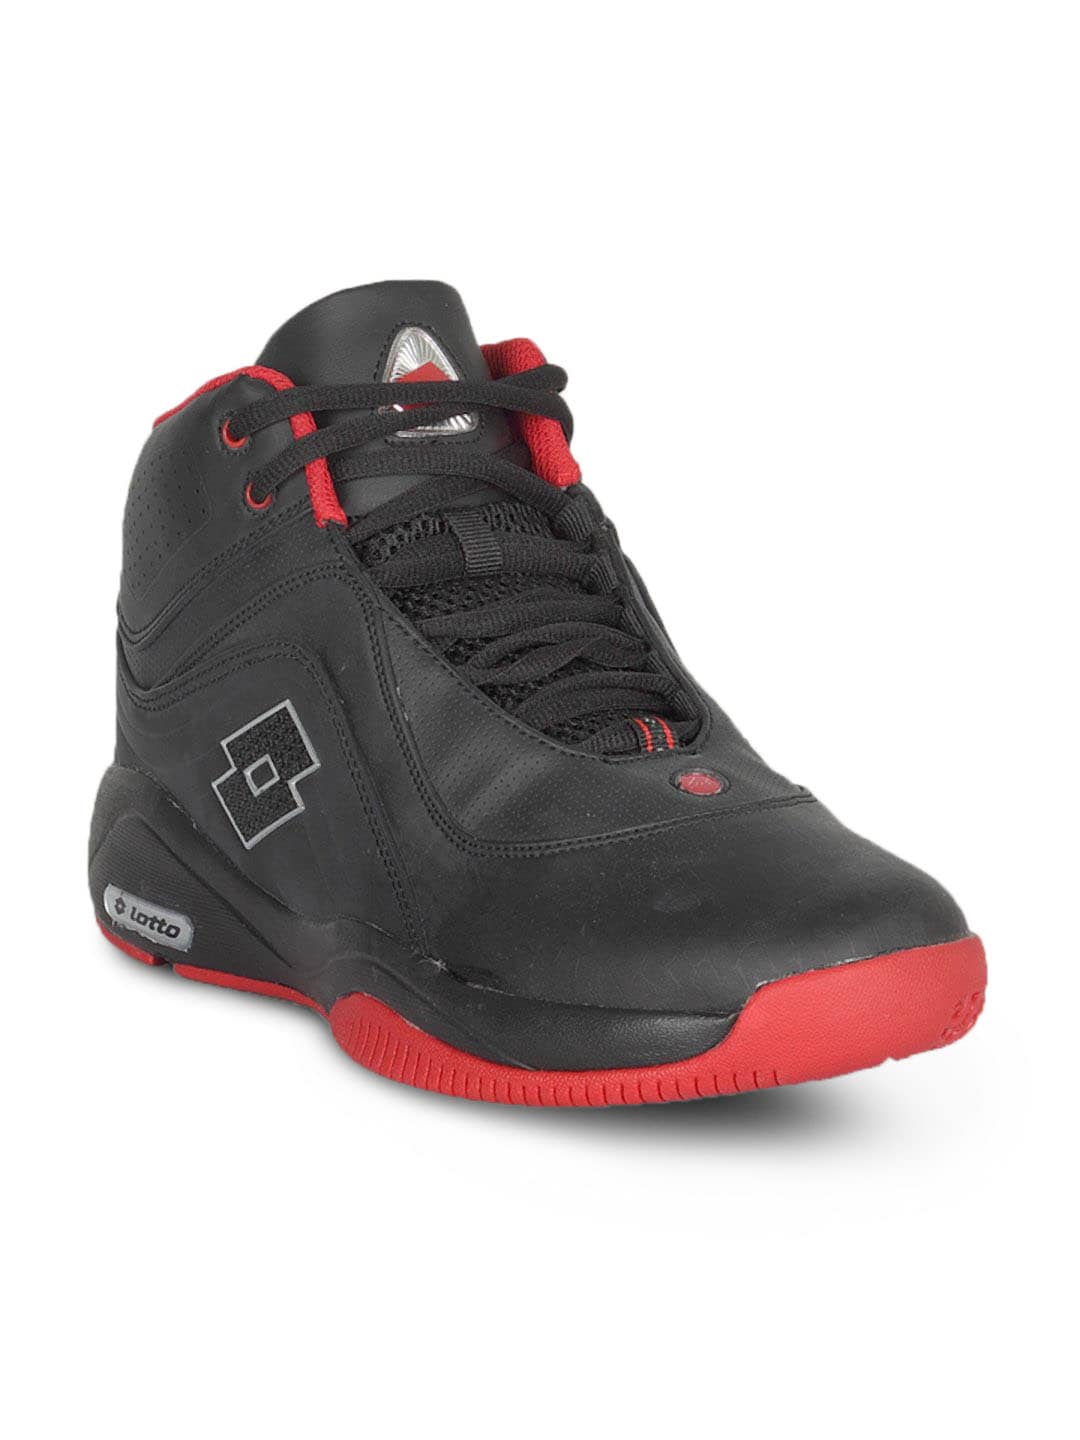 Lotto Men's BasketBall Black Red Shoe